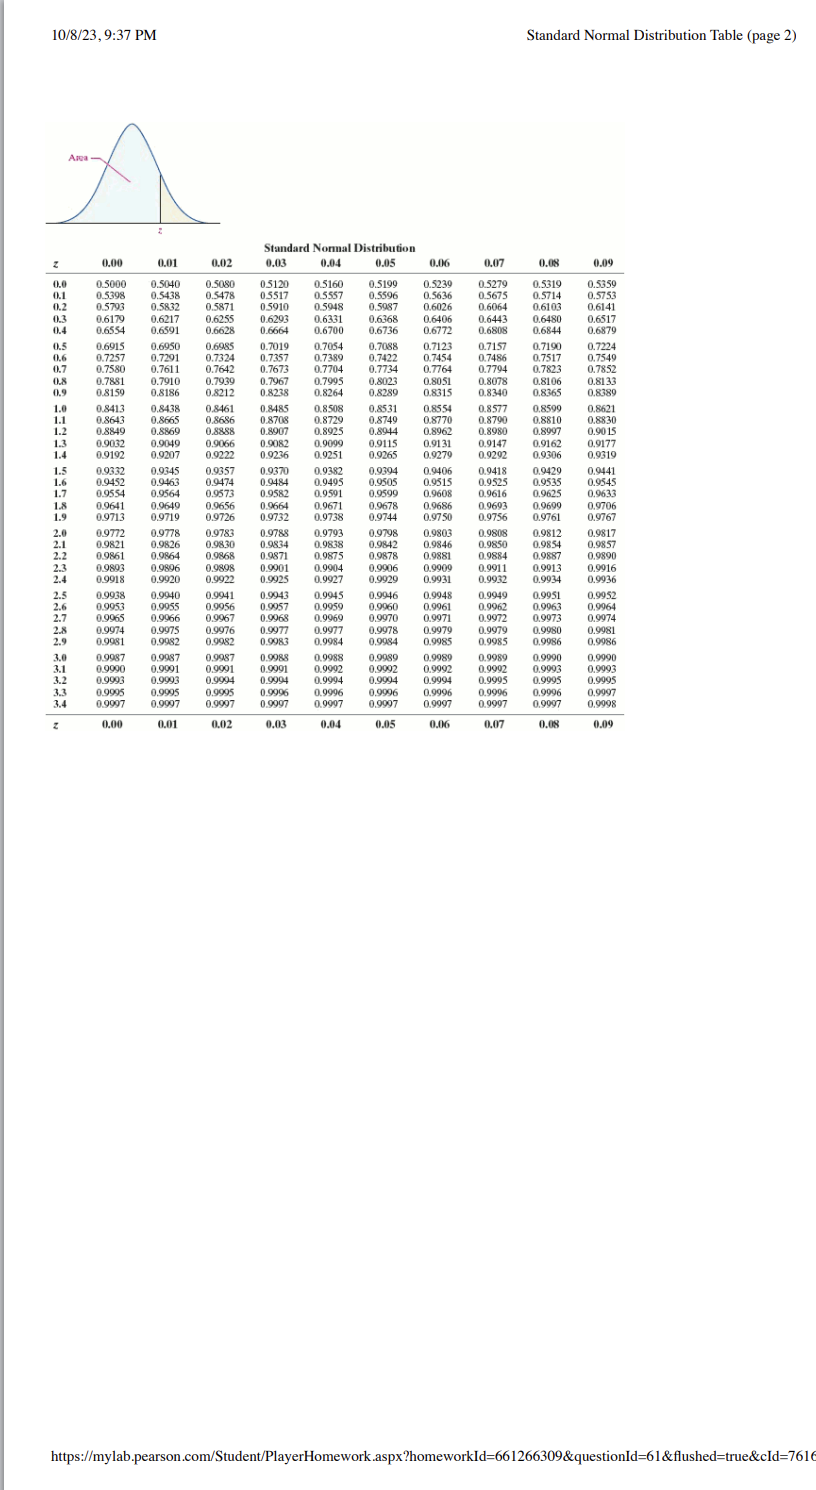 10/8/23, 9:37 PM
Standard Normal Distribution
Standard Normal Distribution Table (page 2)
https://mylab.pearson.com/Student/PlayerHomework.aspx?homeworkId=661266309&questionId=61&flushed=true&cId=7616